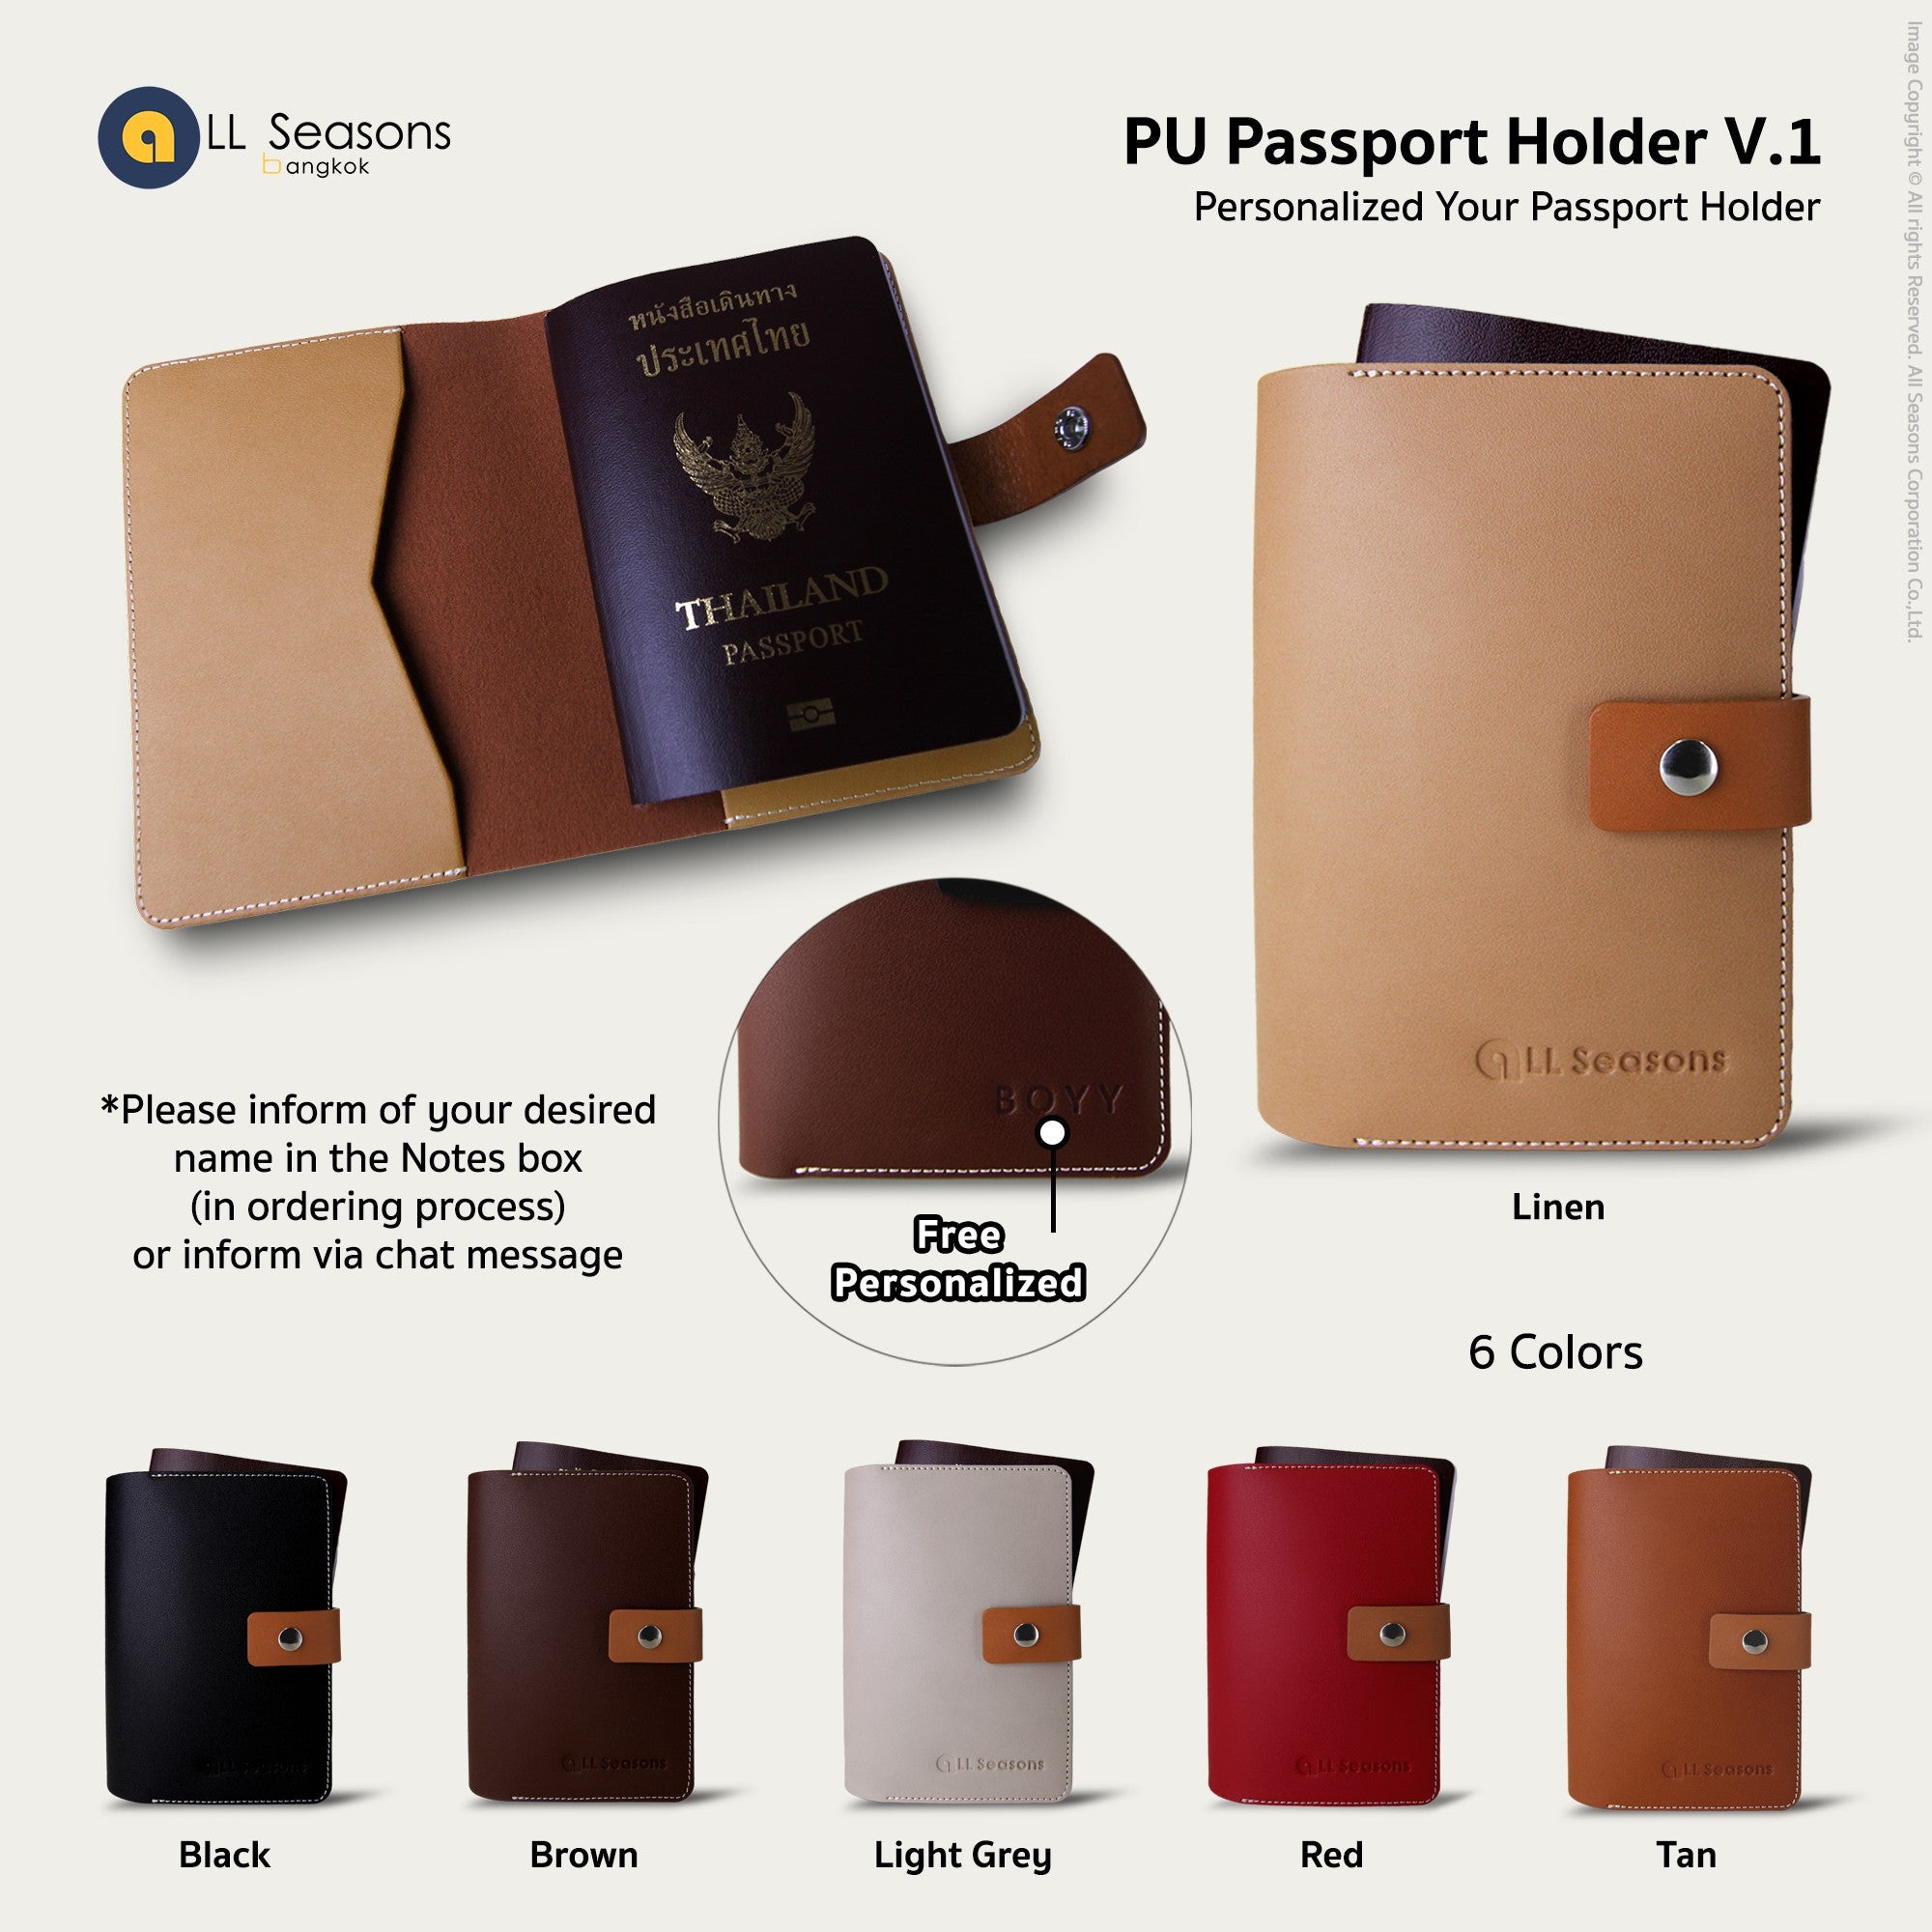 Personalized PU Passport Holder V.1